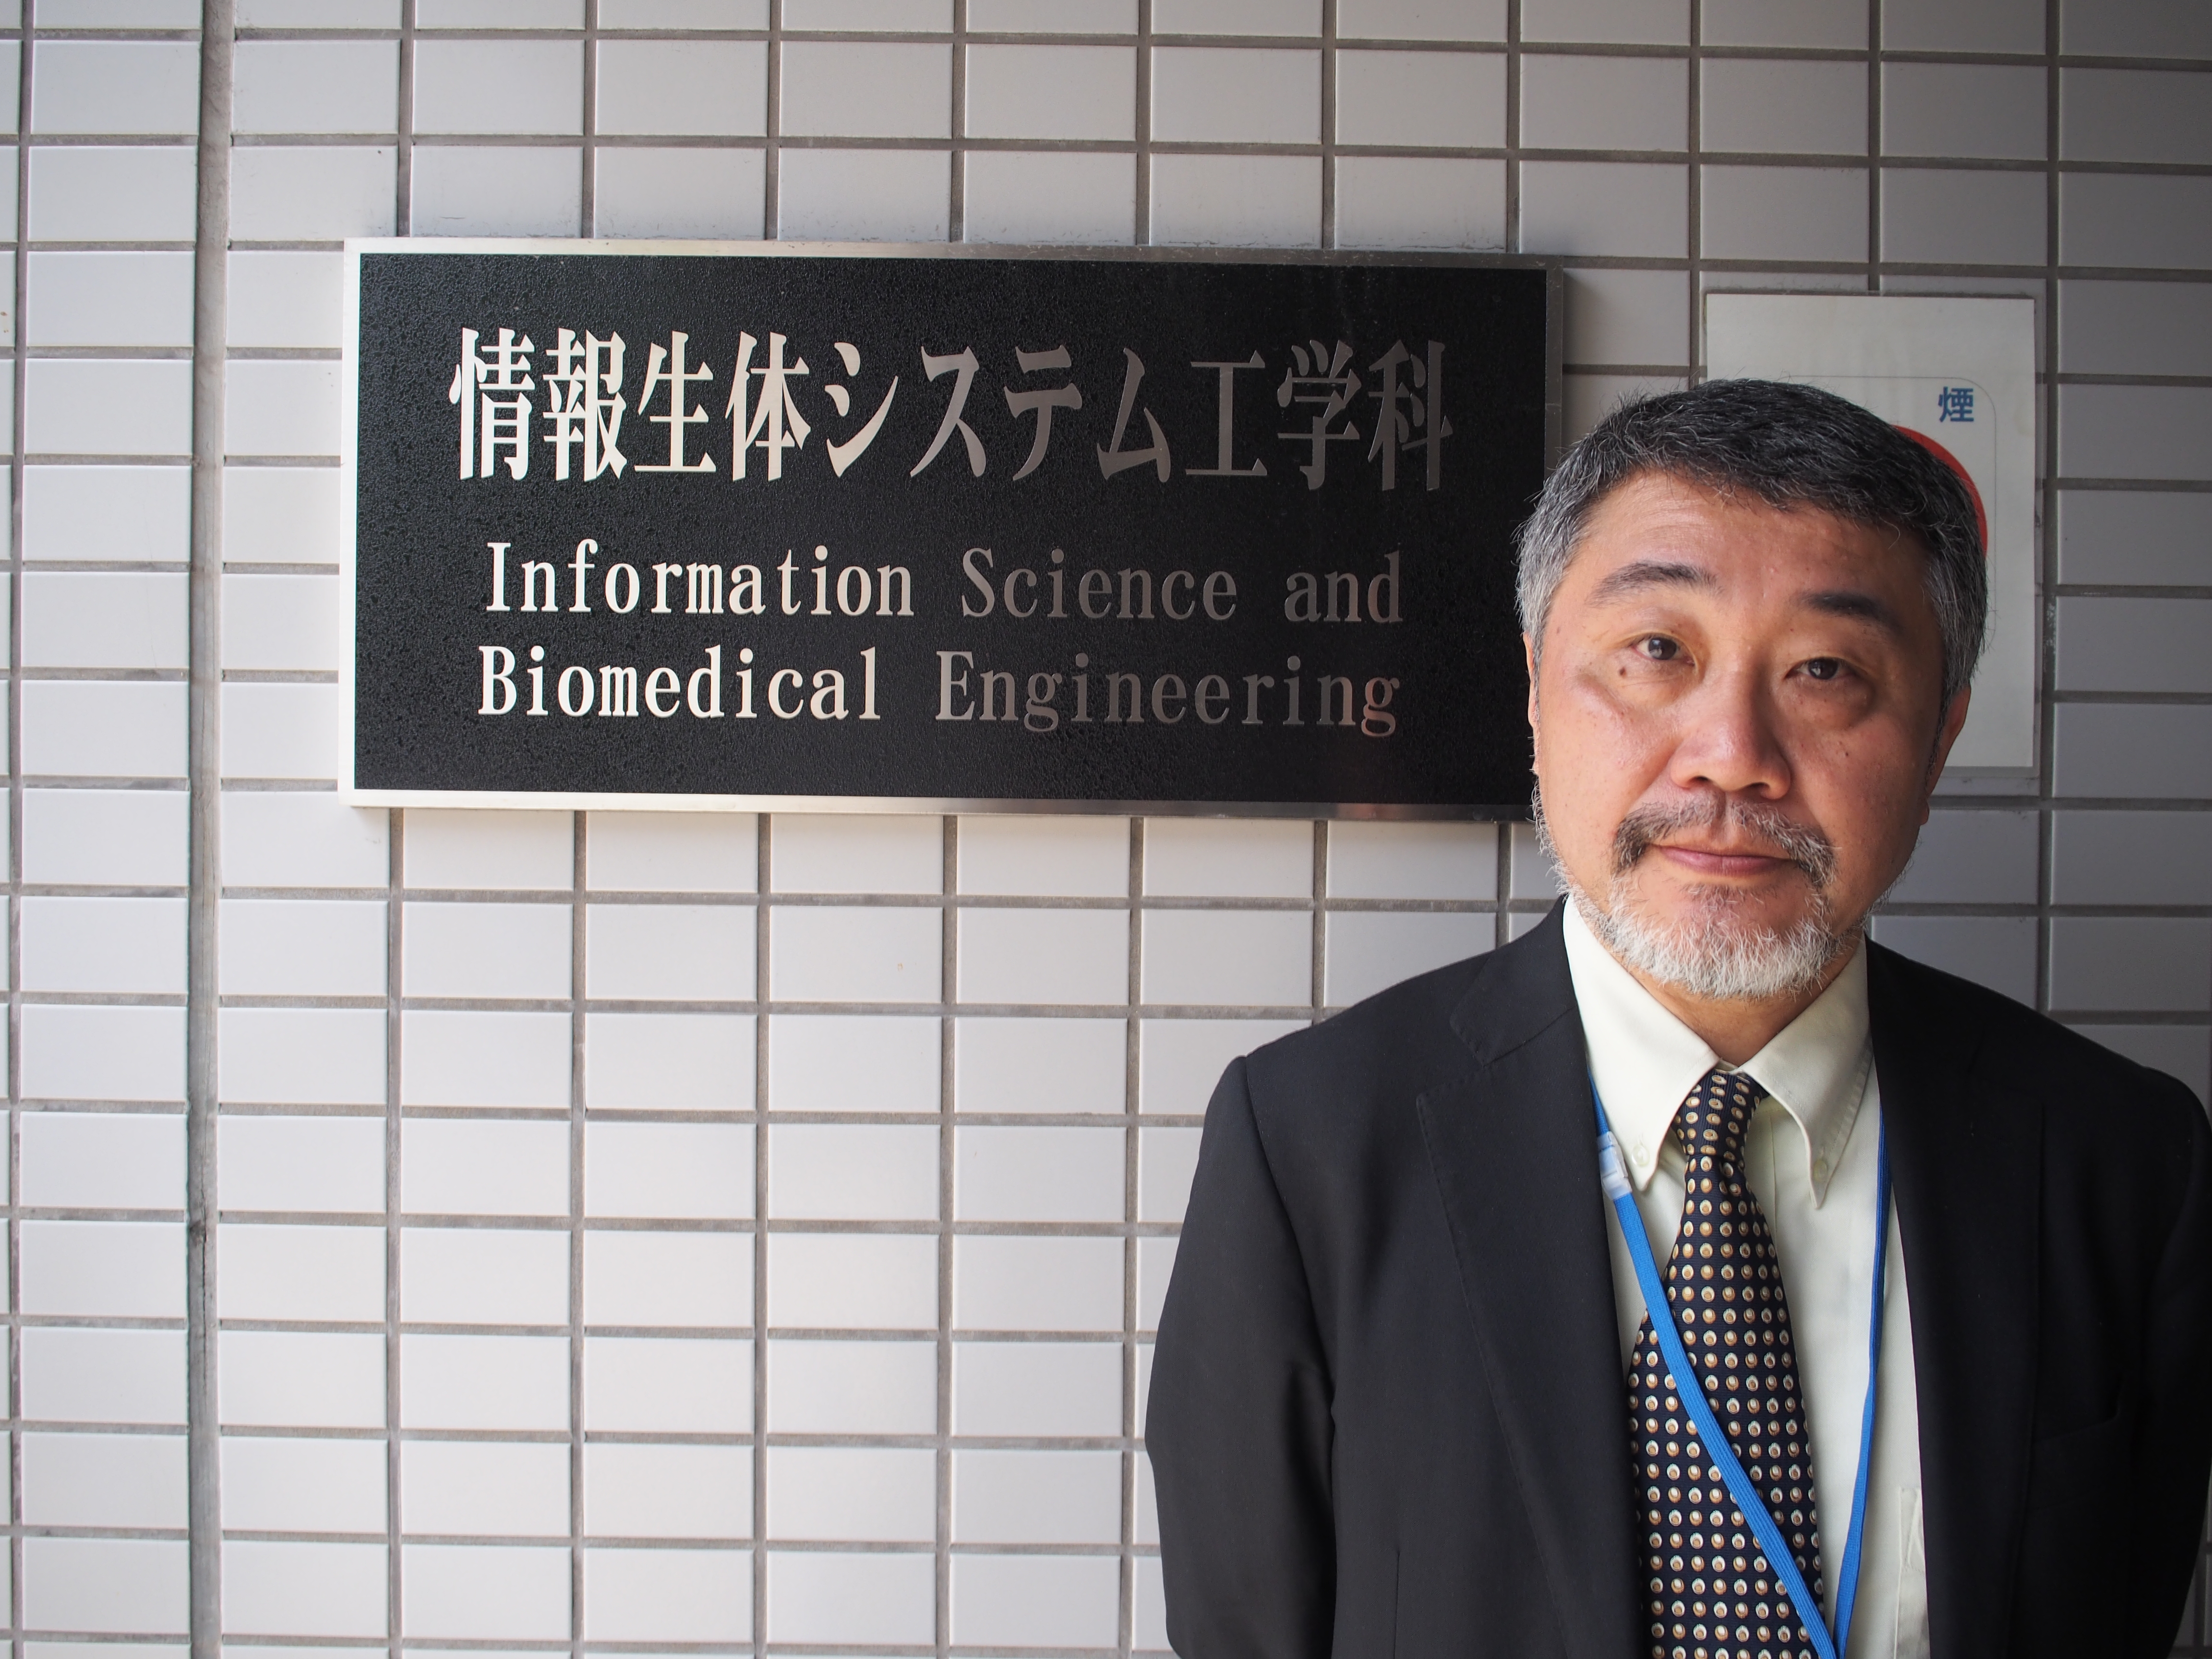 Professor Watanabe